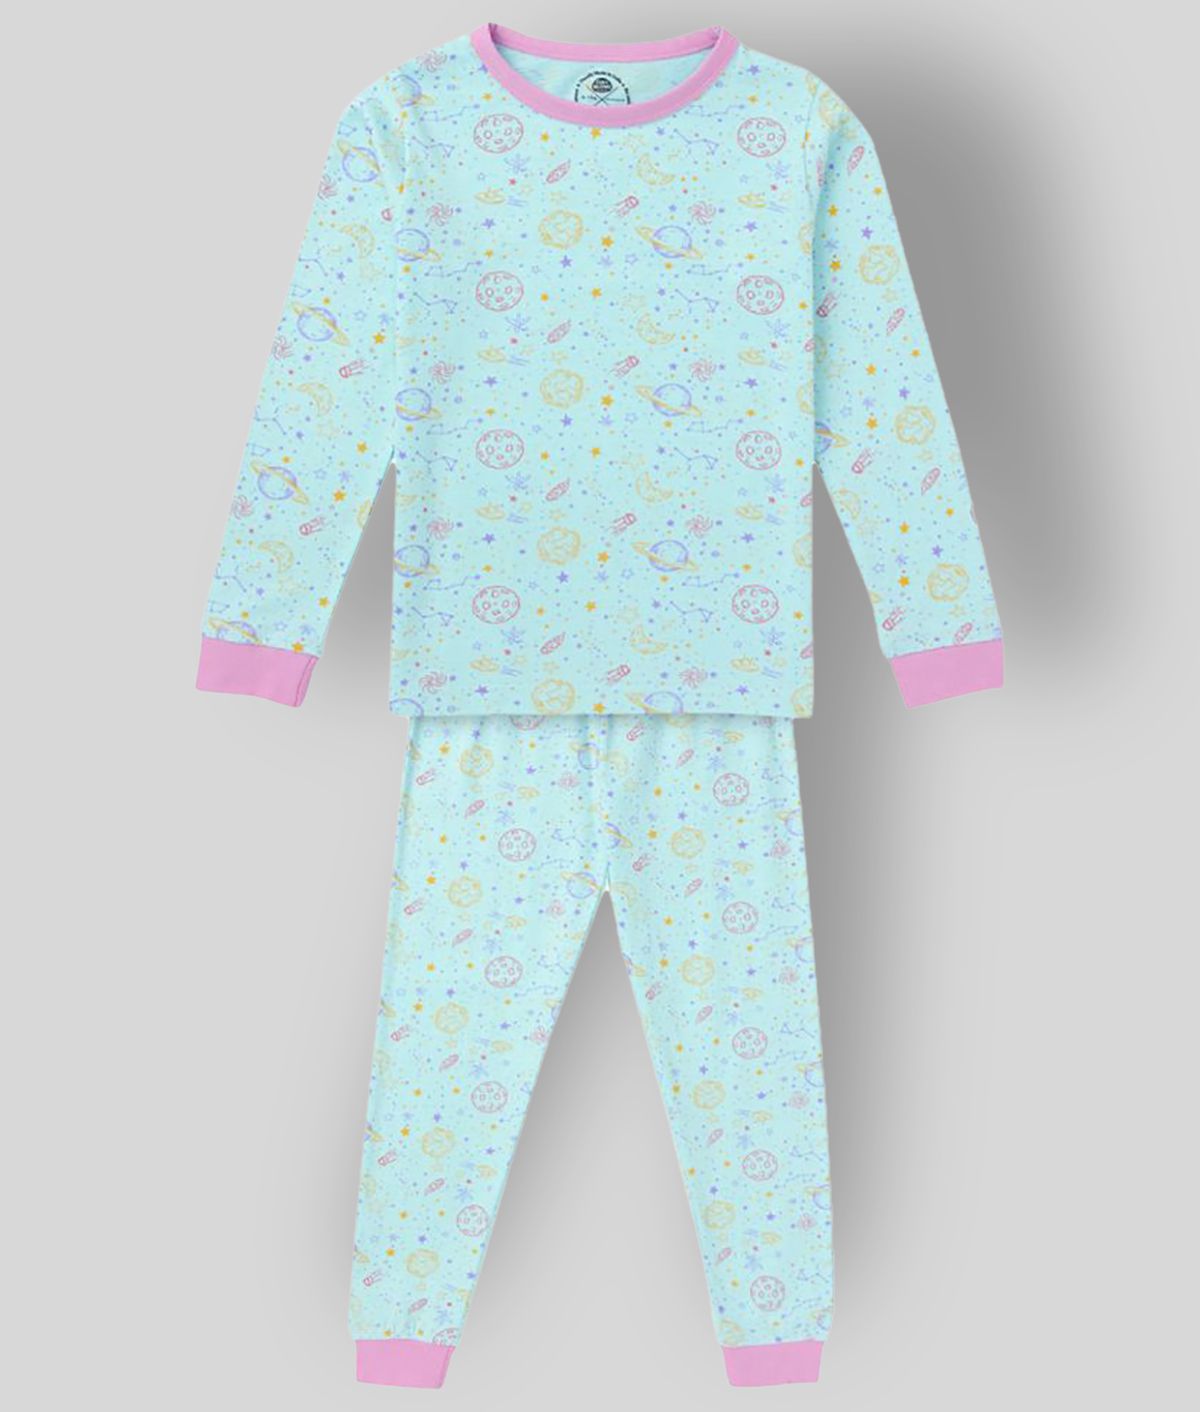 Cub Mcpaws - Multi Color Cotton Girls Night Suit Set ( Pack of 1 )